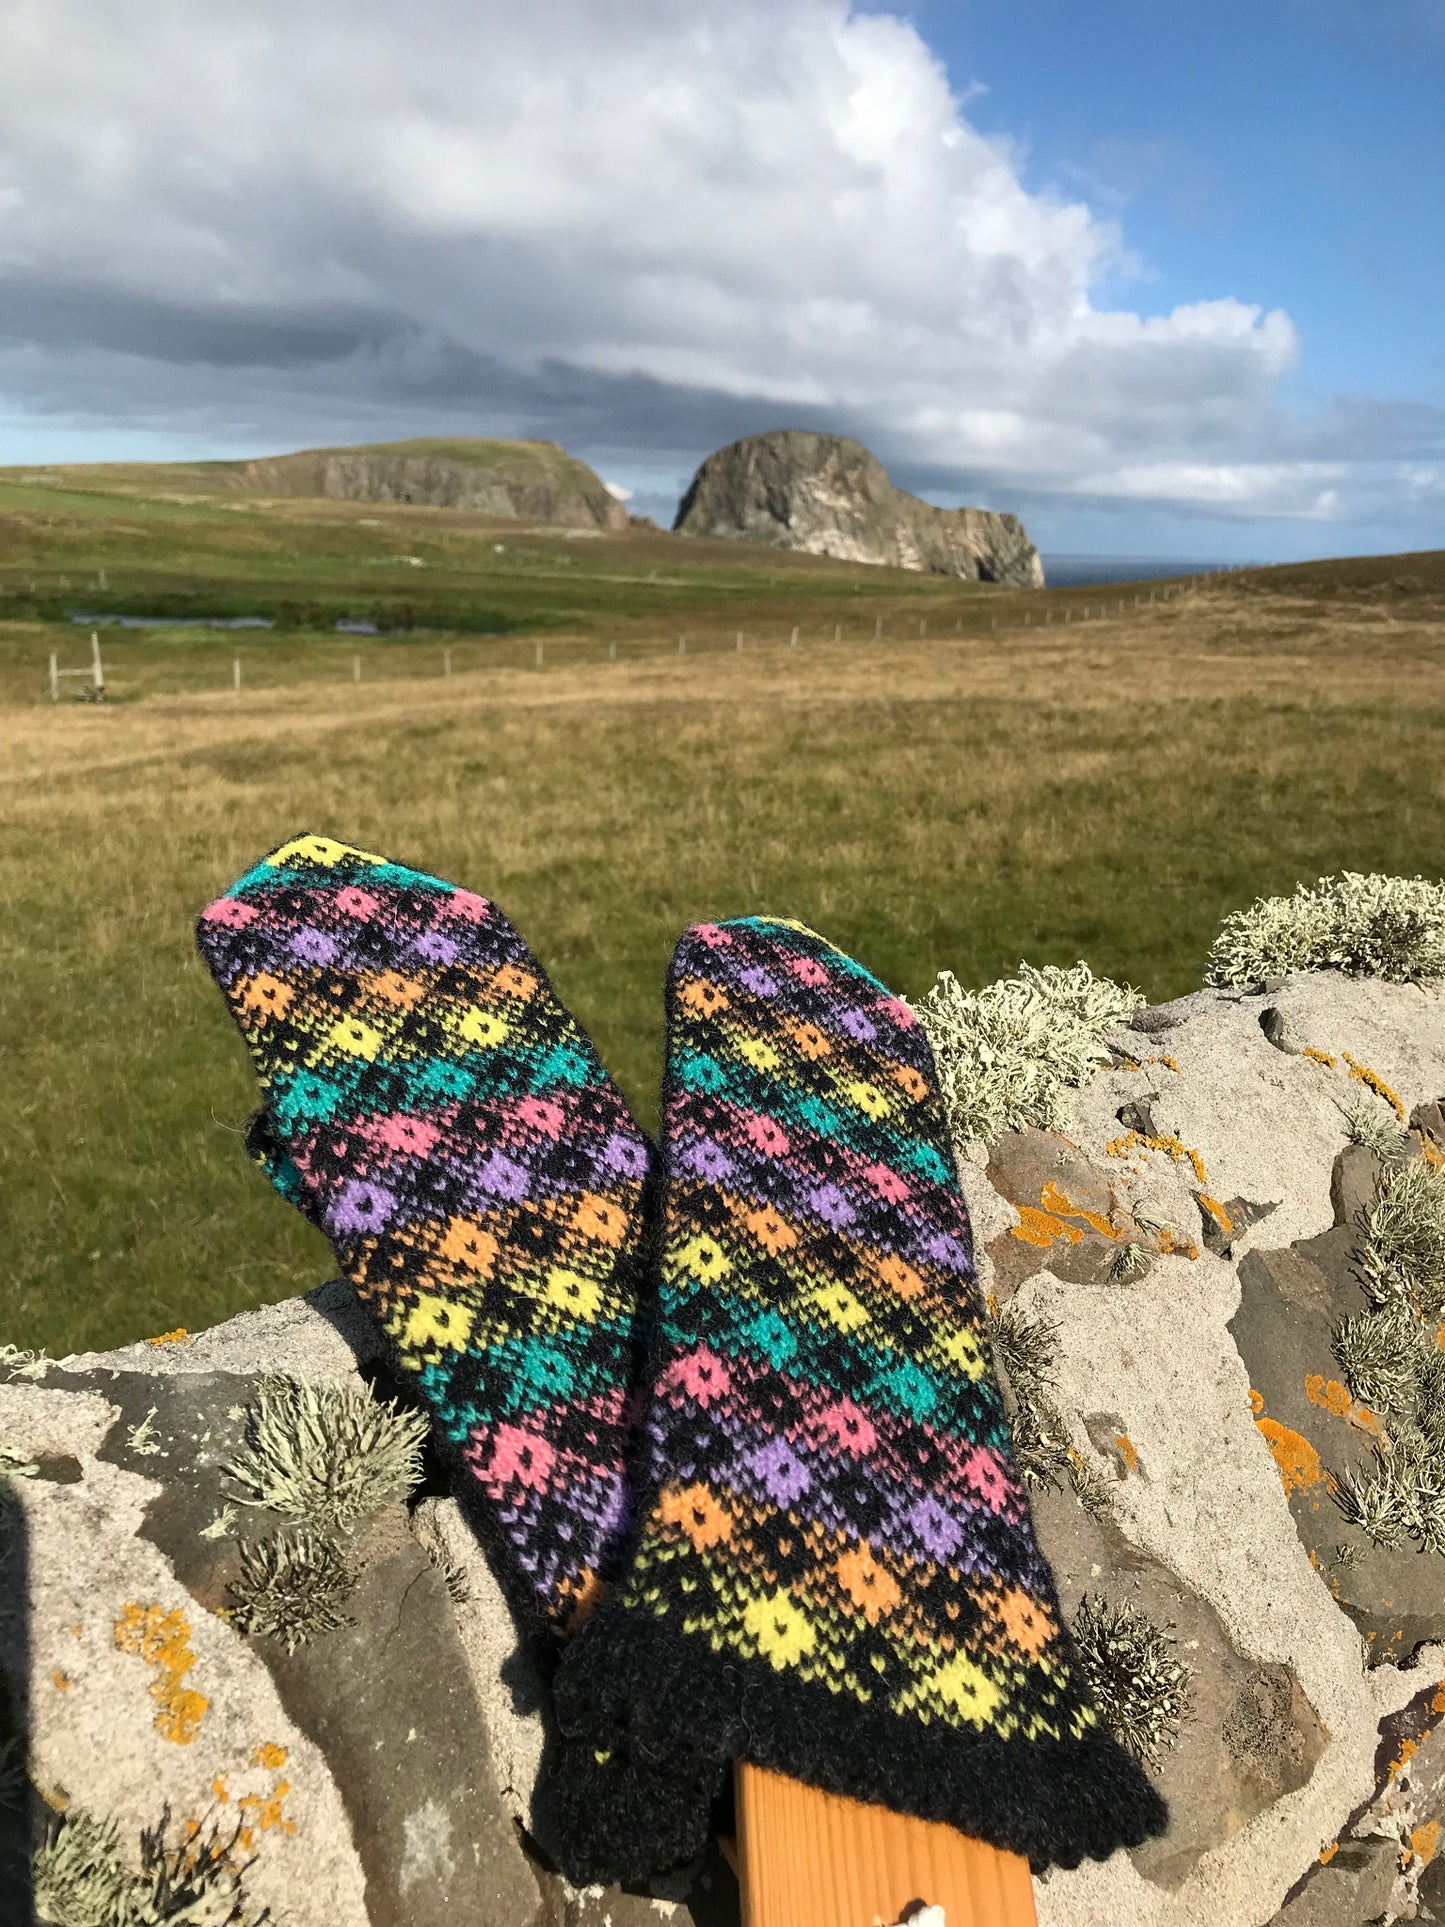 Knitting Jenny Pattern 13: Fair Isle Inspired Shetland Mittens and Design Workbook